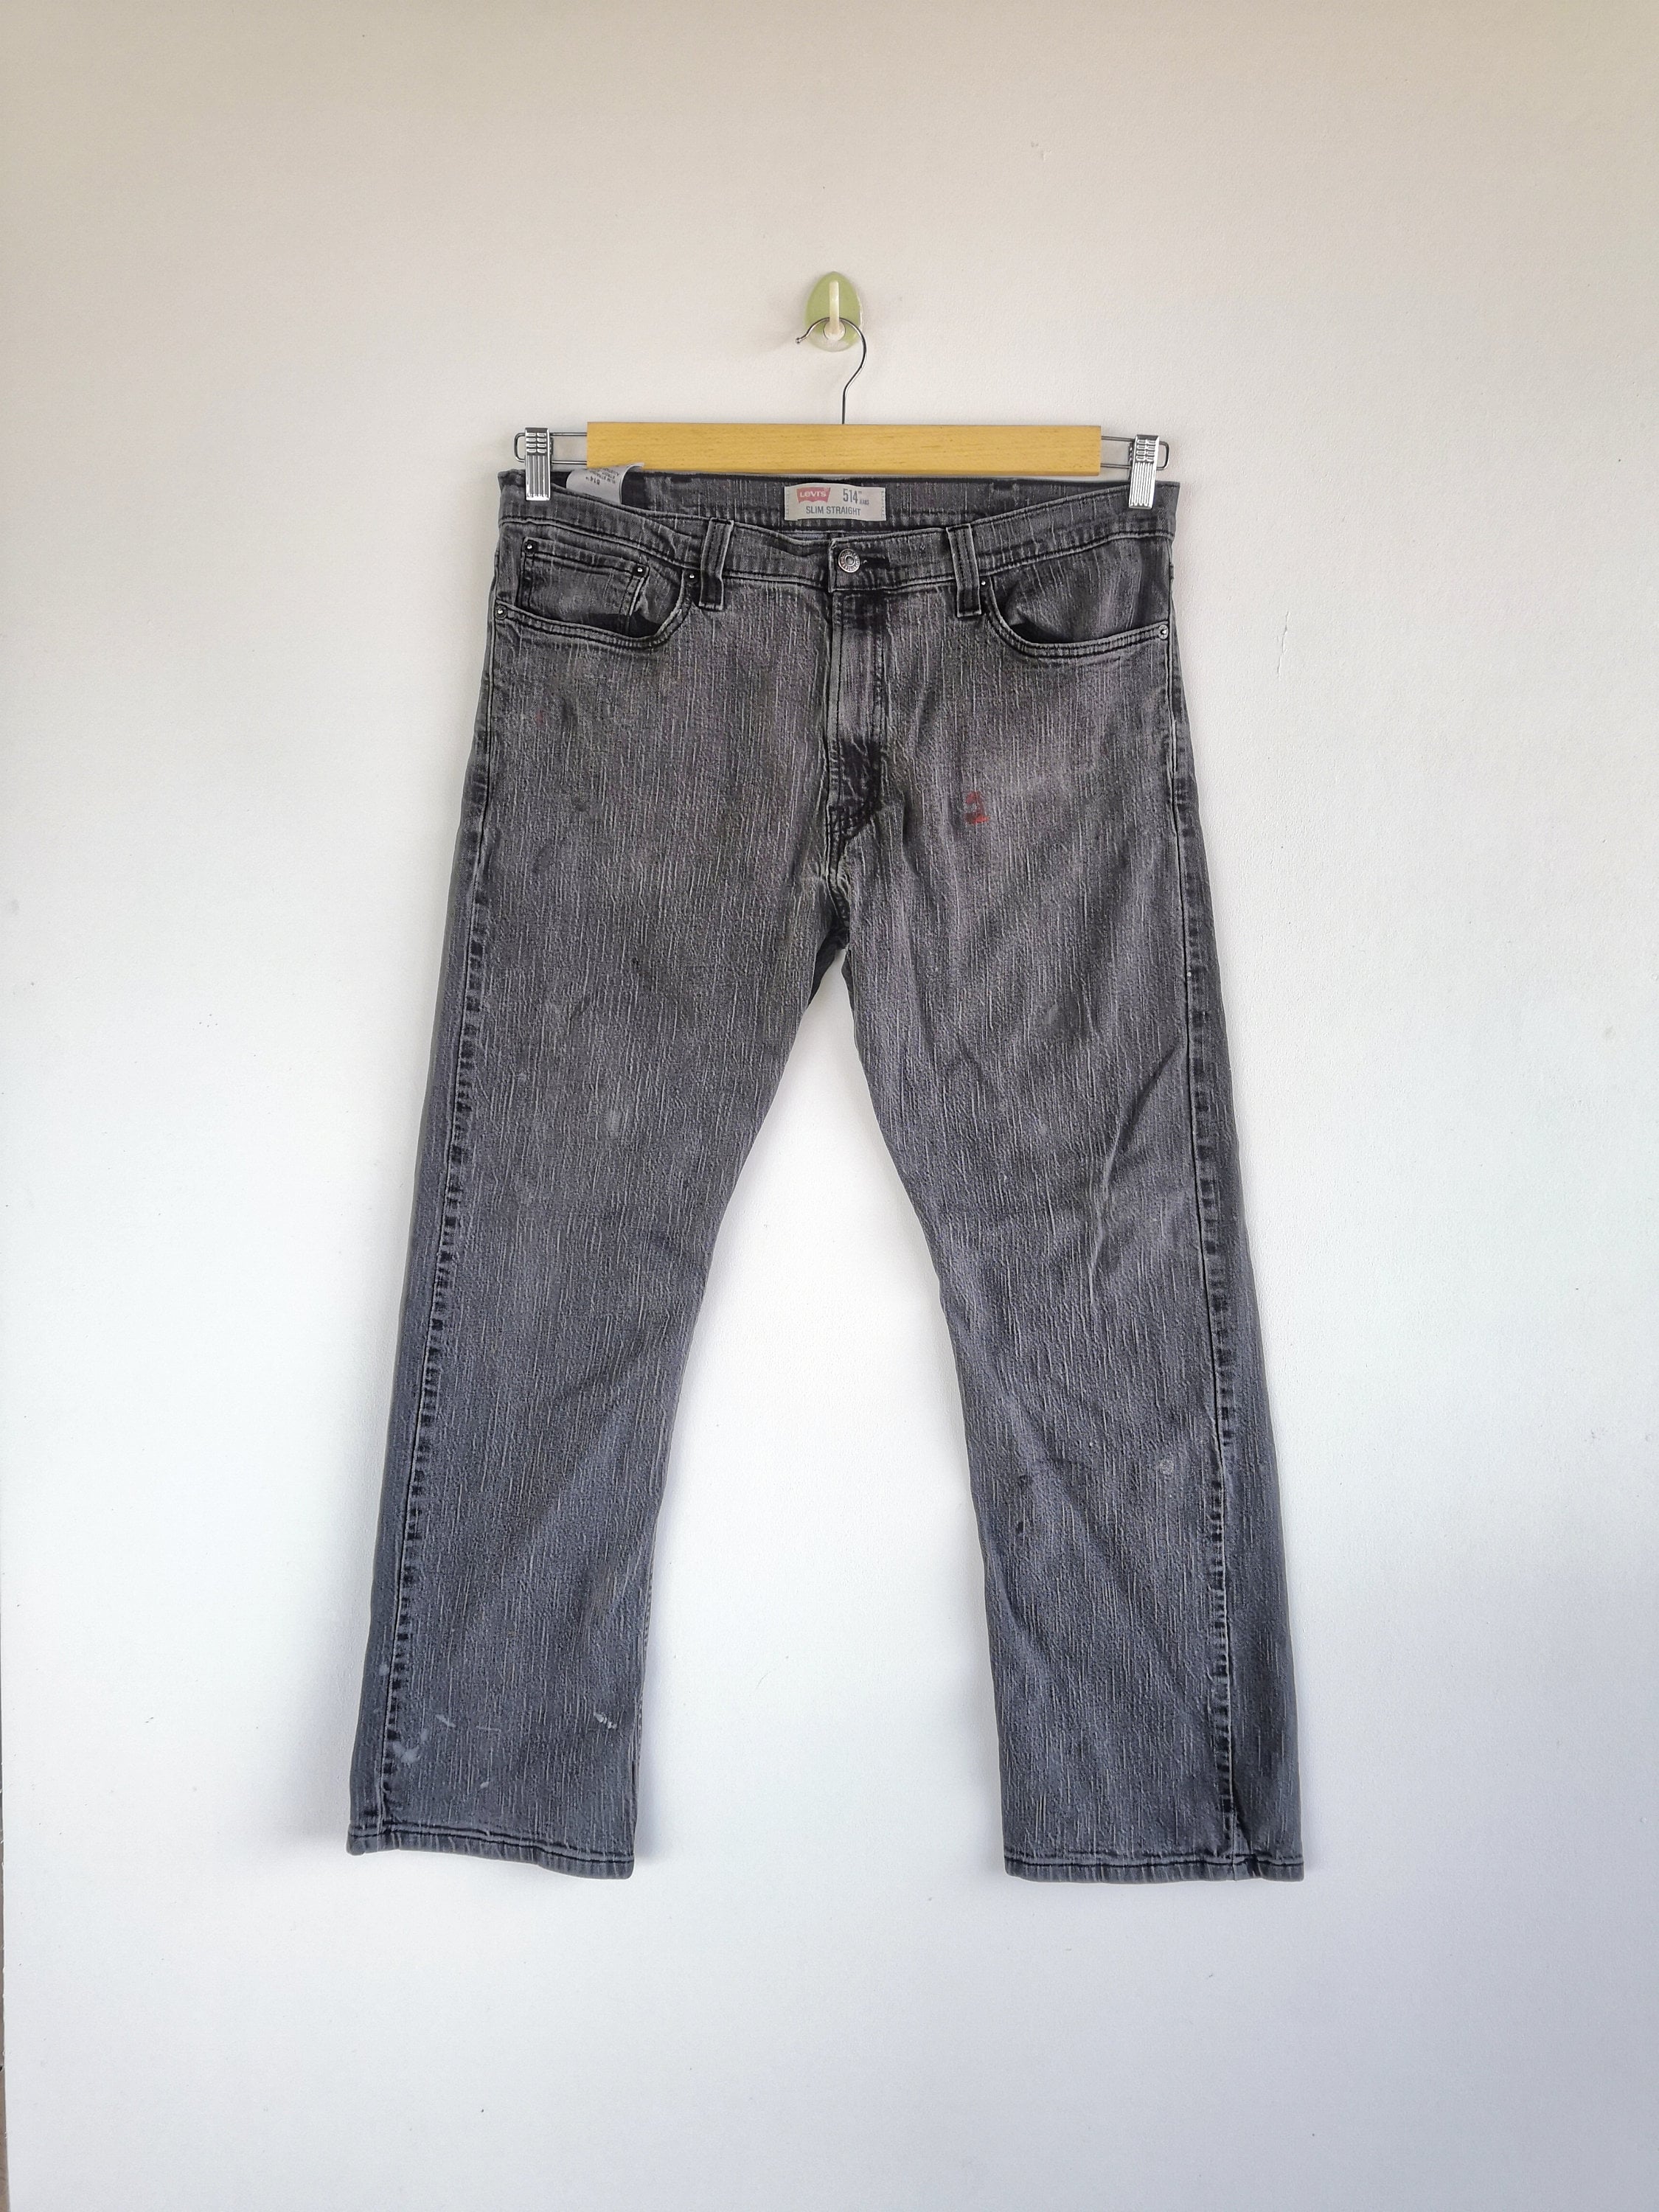 Levis 514 Jeans - Etsy New Zealand